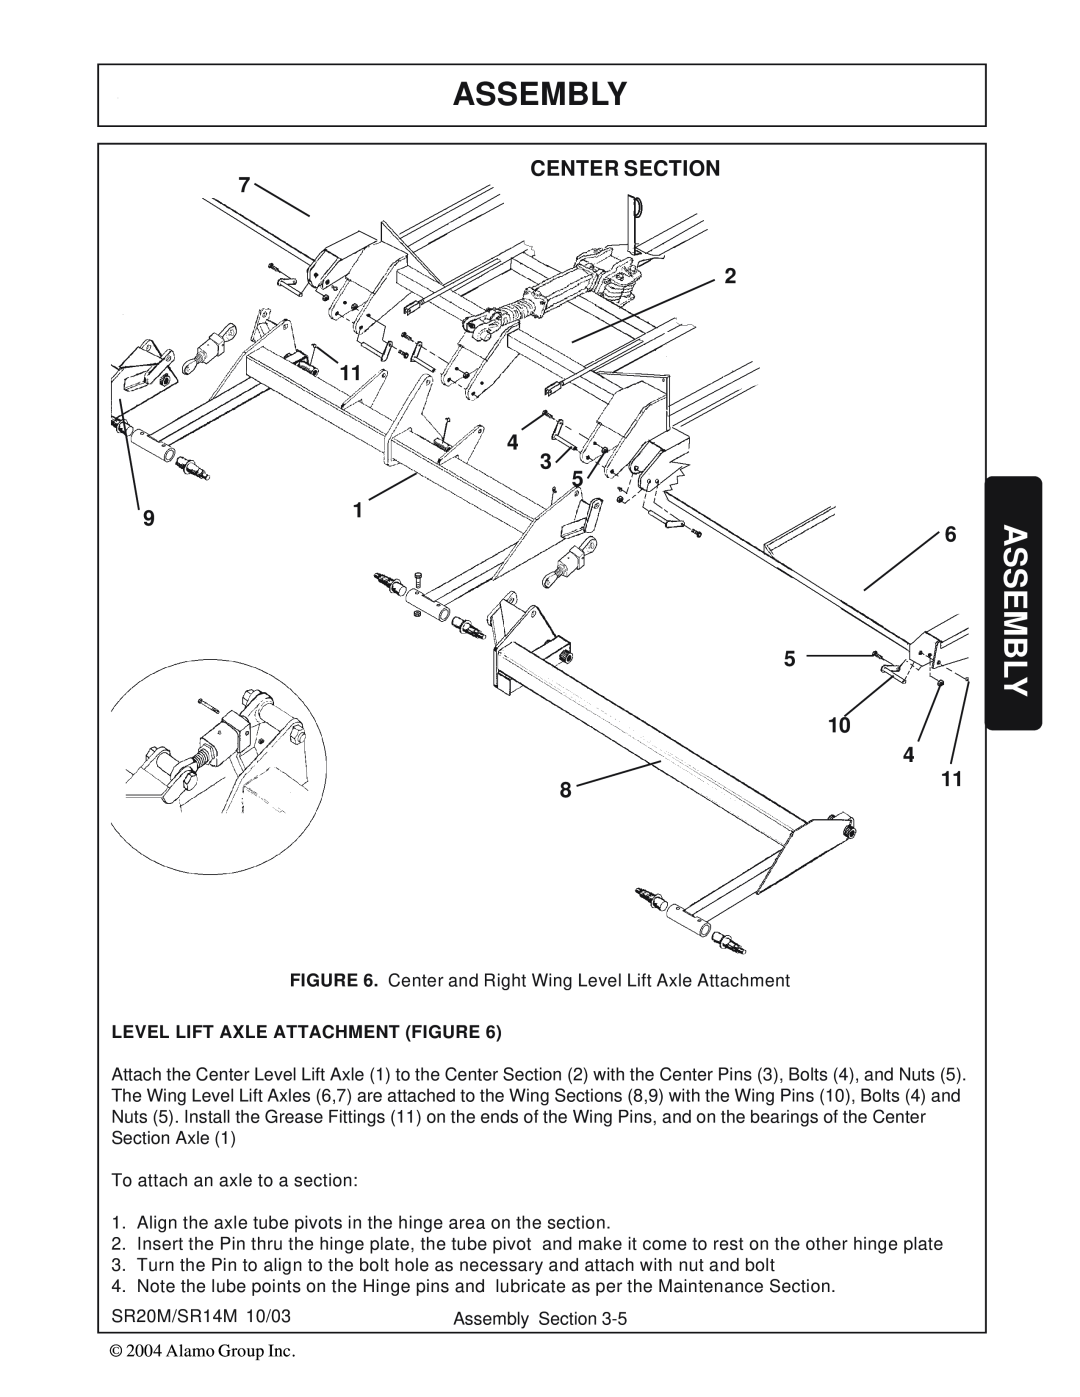 Alamo SR14, SR20 manual Assembly, Center Section, Level Lift Axle Attachment Figure 